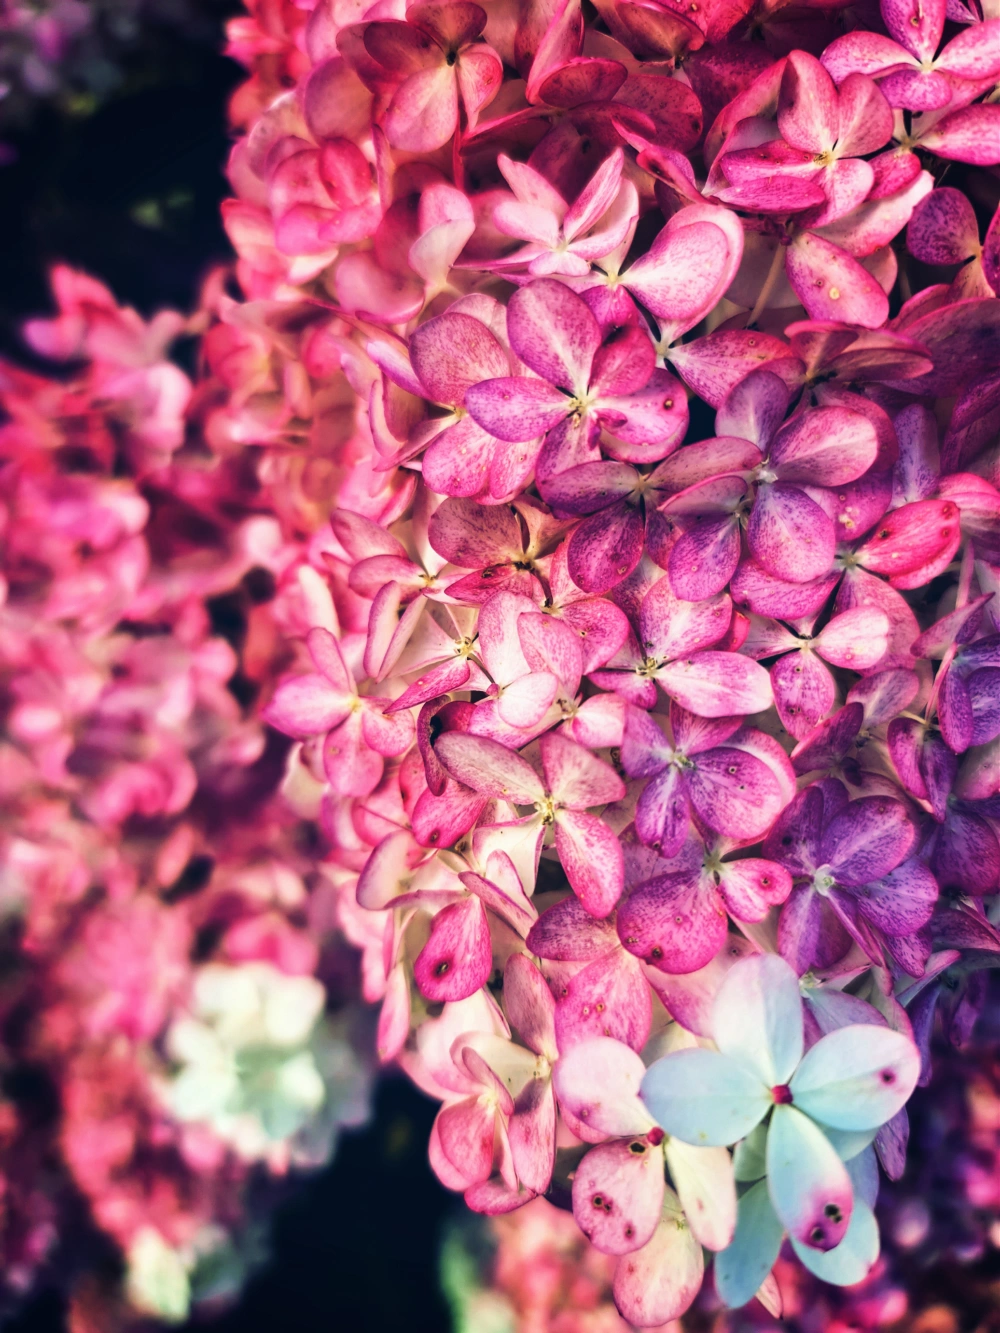 #flowers #hydrangea #beautifulnature #colorsofnature